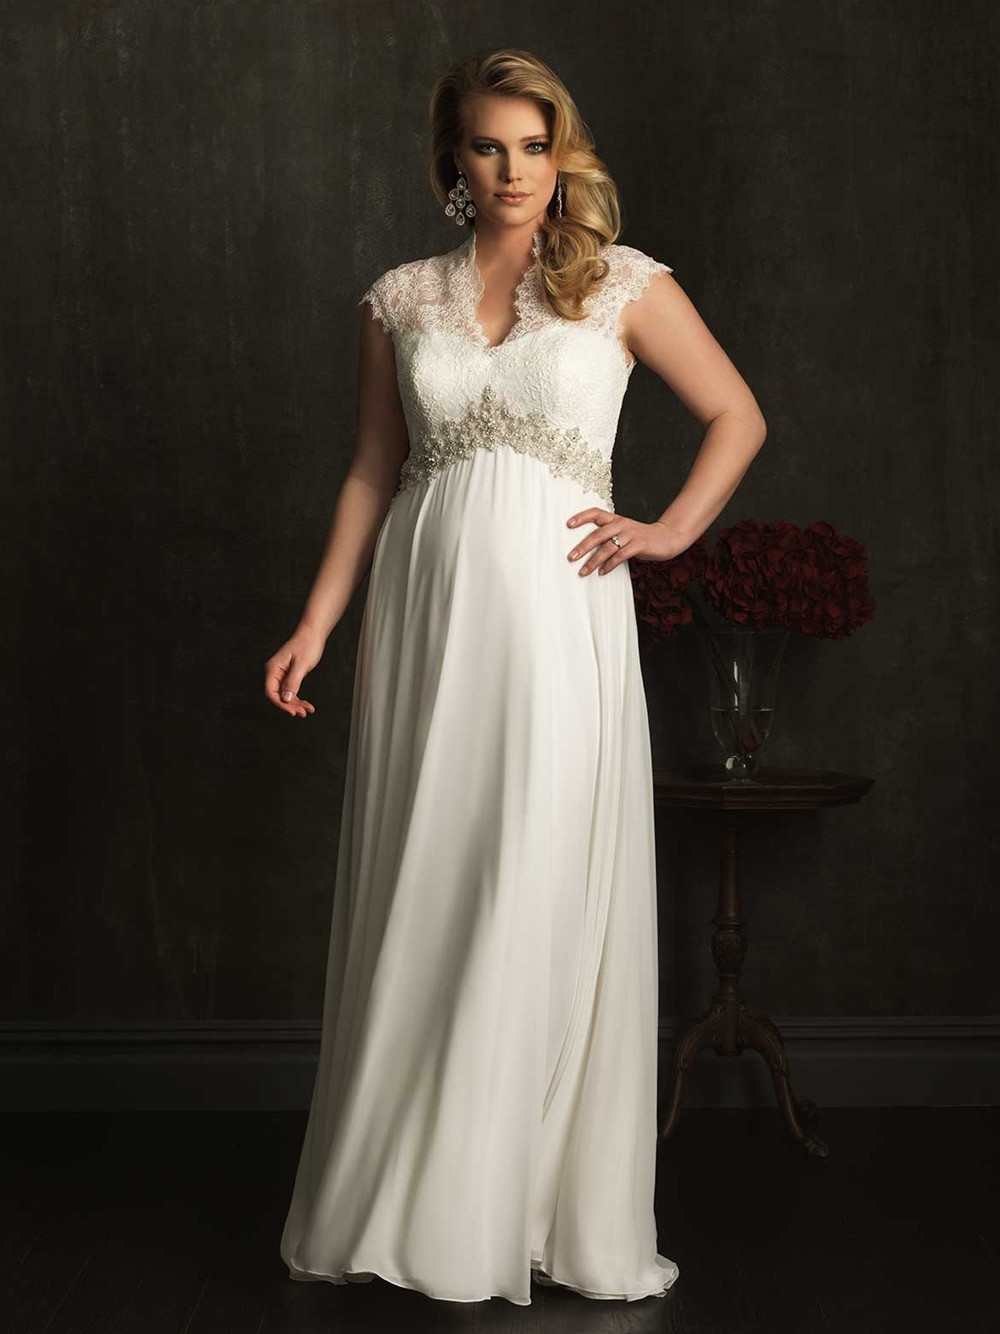 Empire Waist Wedding Dresses
 Aliexpress Buy Modest Empire Waist Chiffon Plus Size